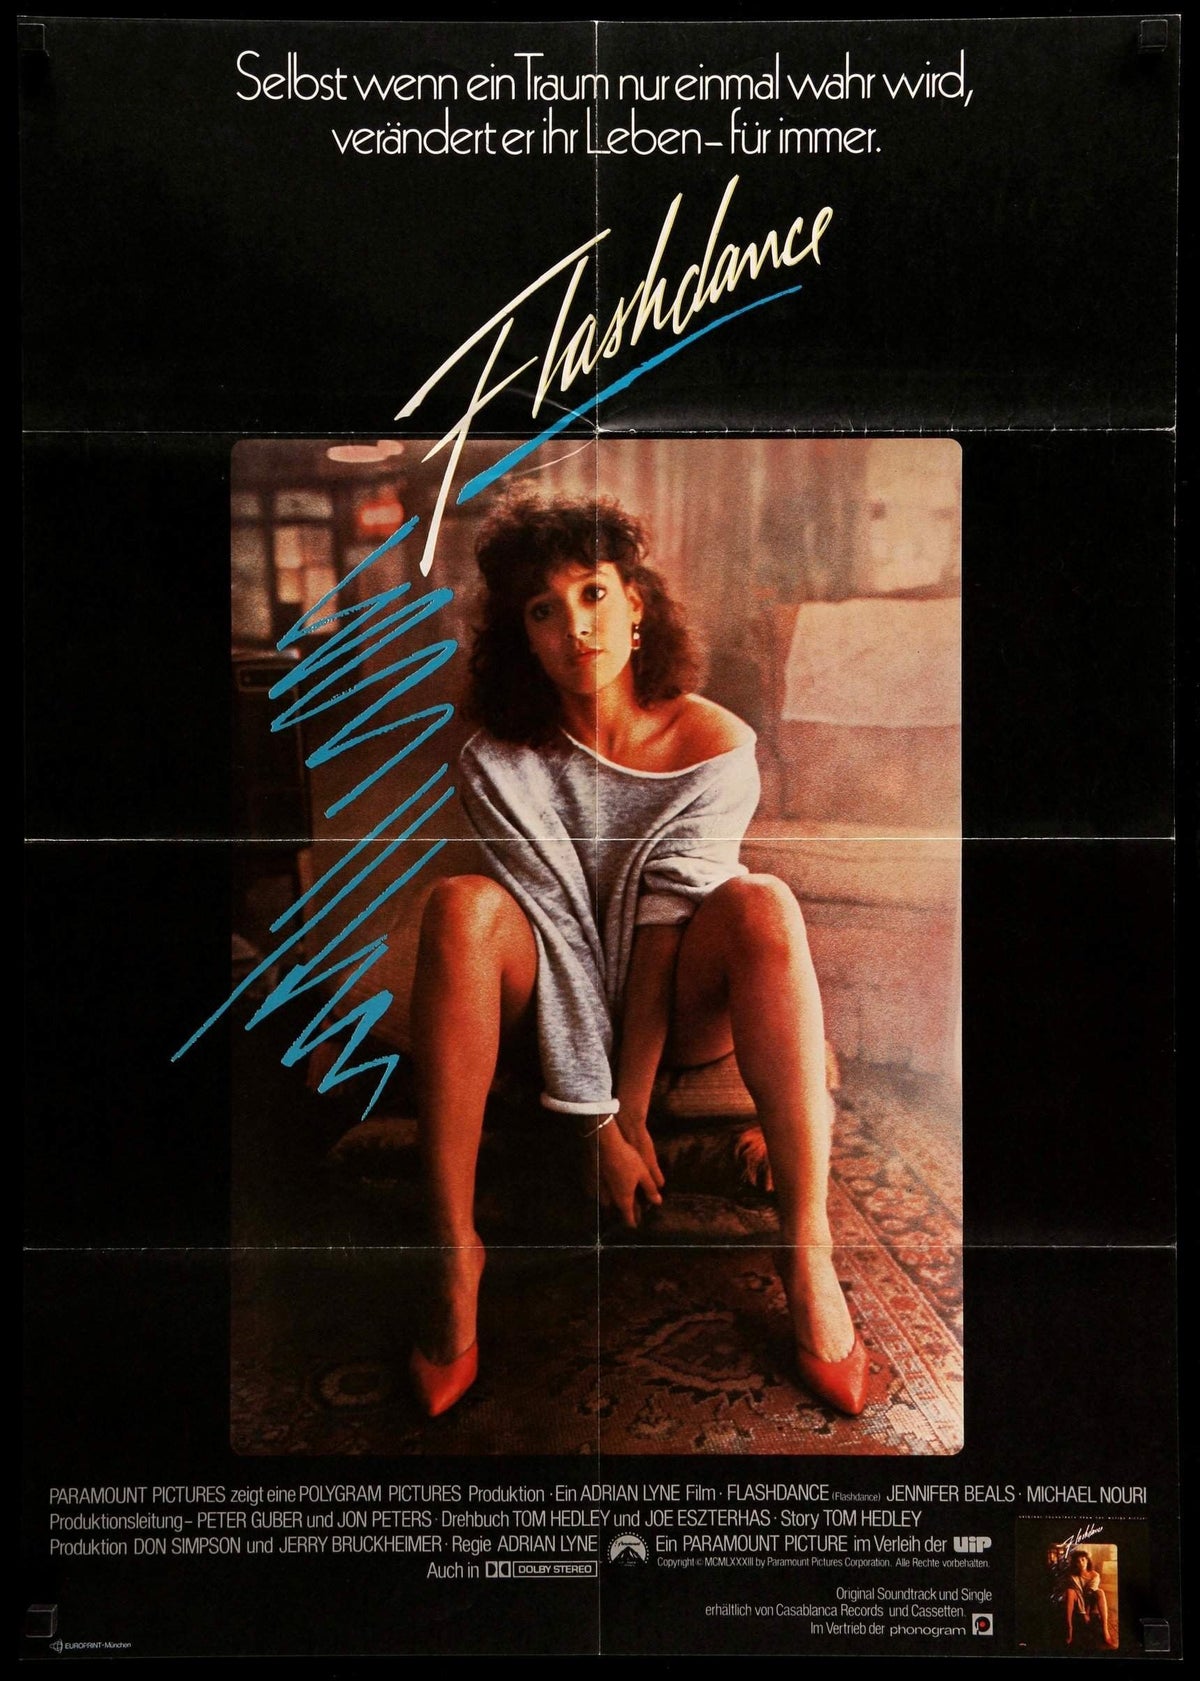 Flashdance (1983) original movie poster for sale at Original Film Art